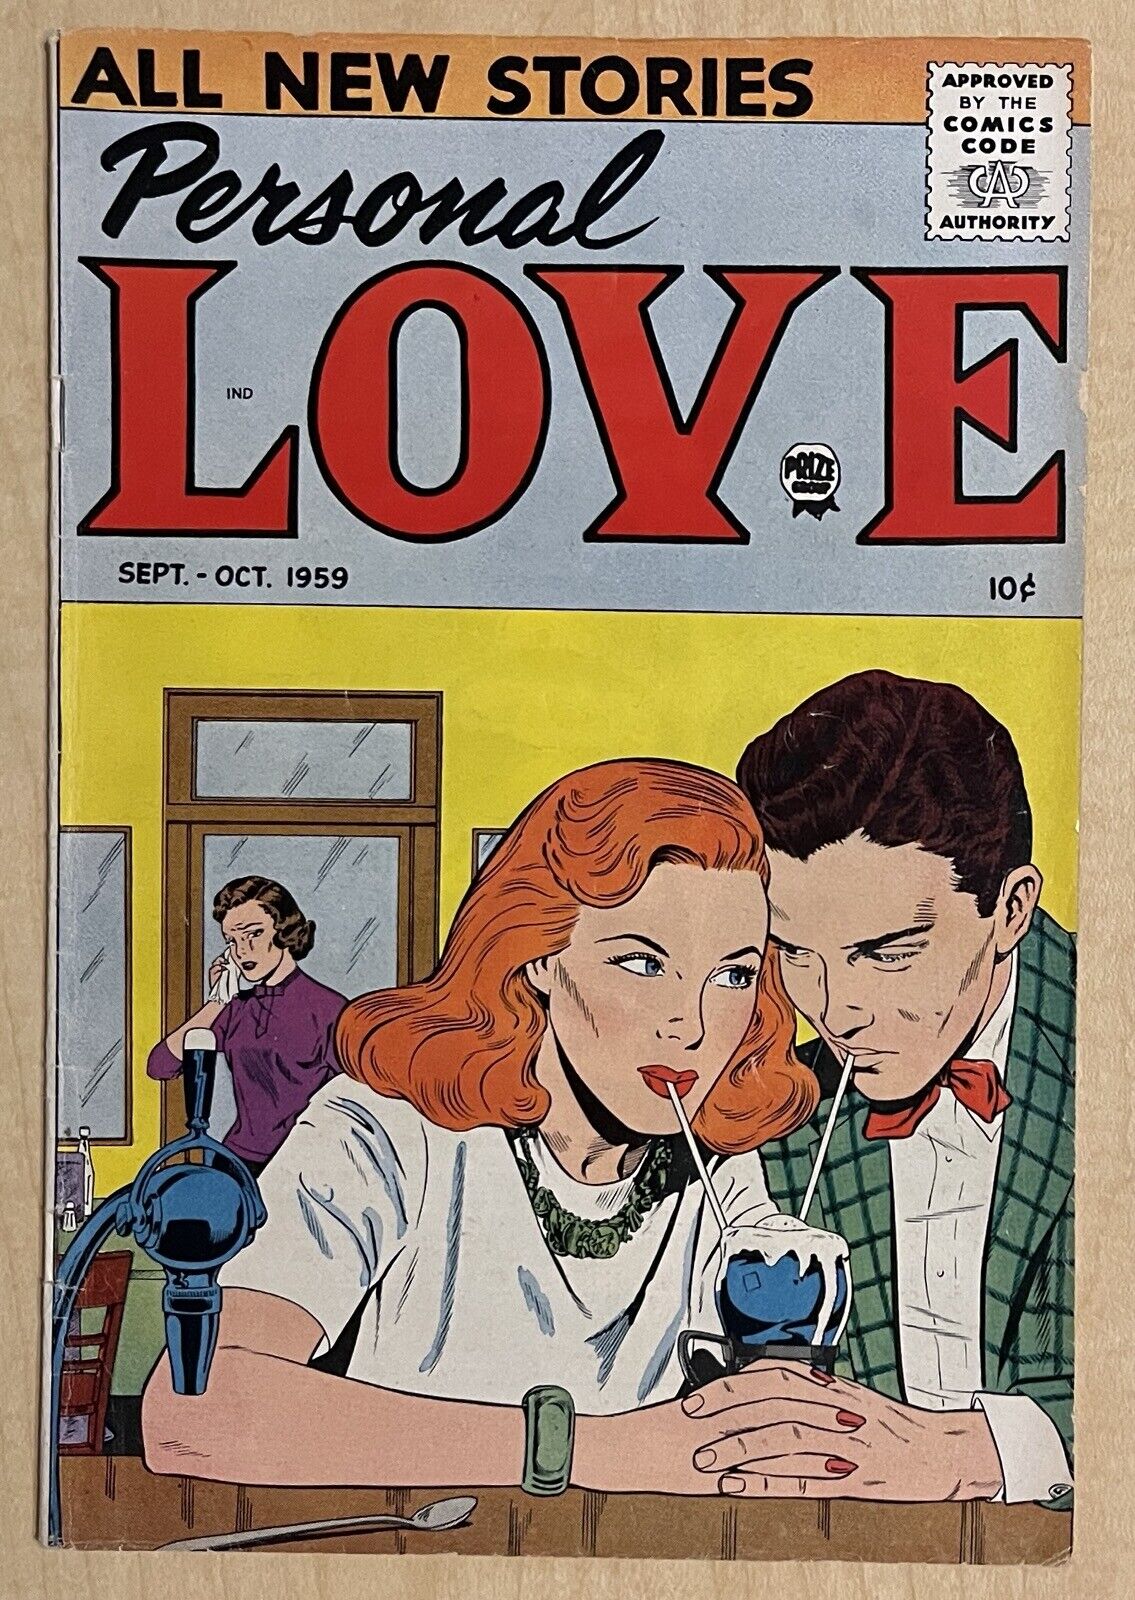 Personal Love Vol 3 #1 VG/F 5.0 Prize Comics 1959